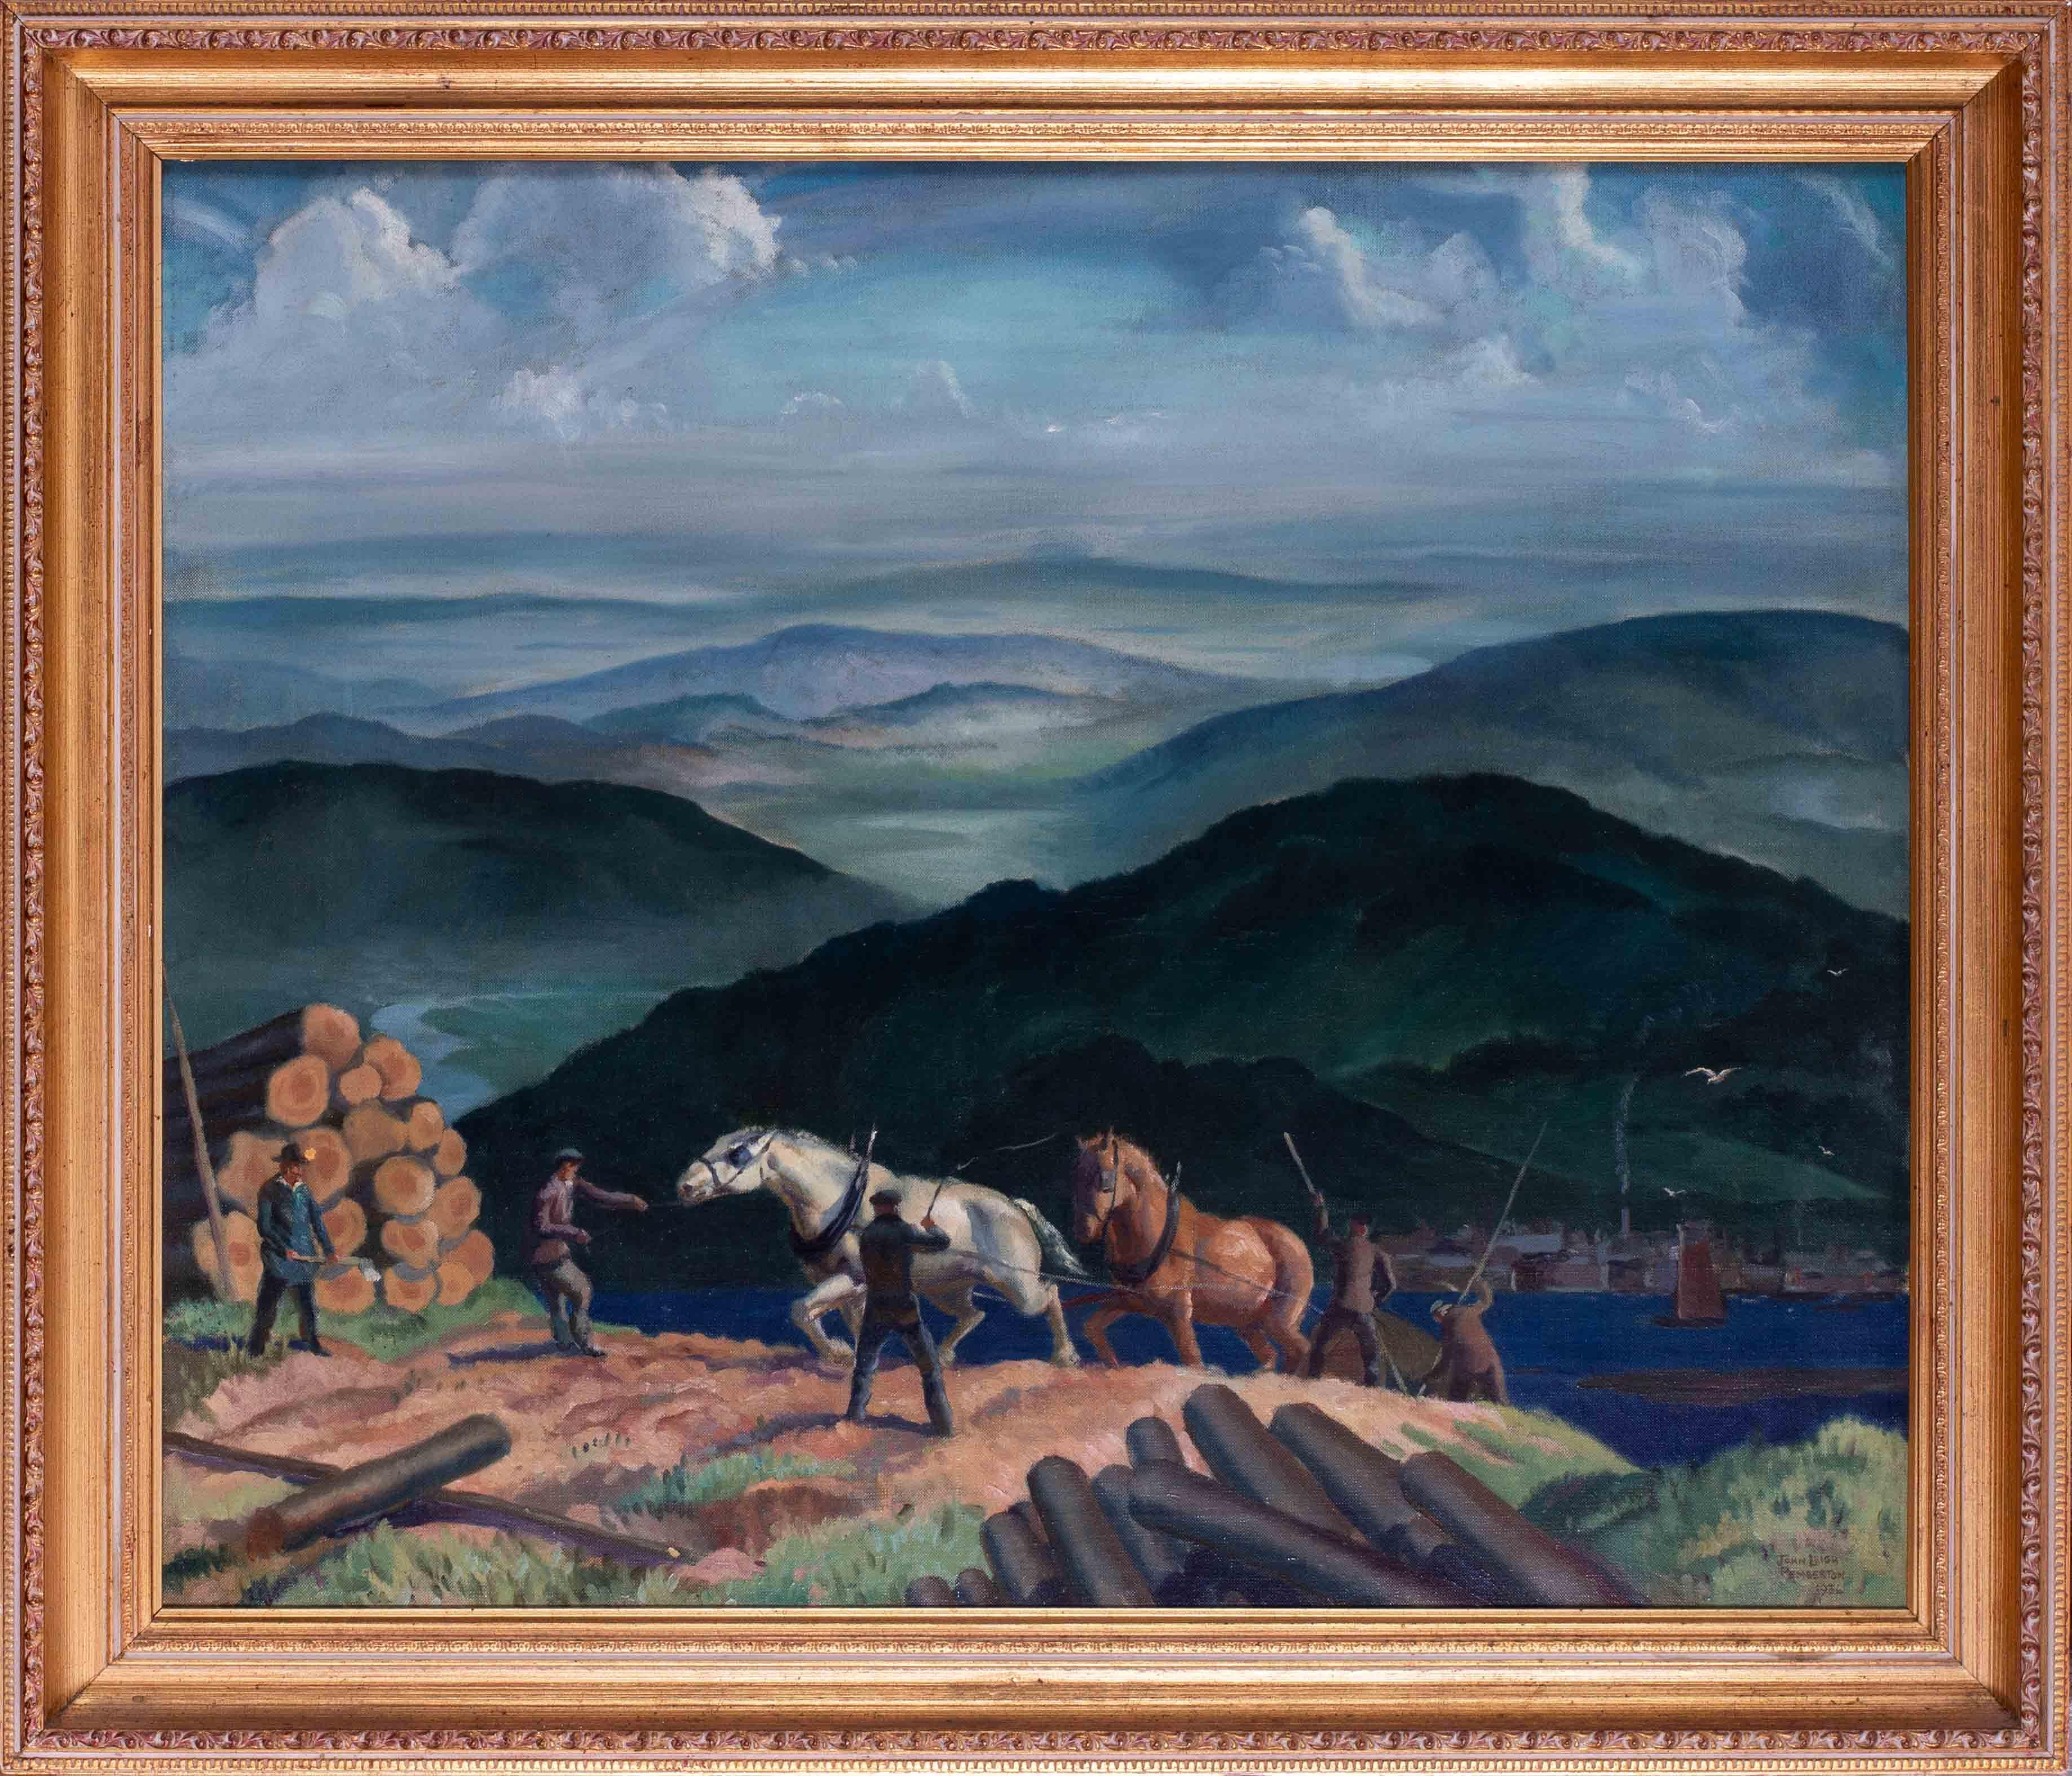 John Leigh-Pemberton Landscape Painting - 20th Century British artist Leigh-Pemberton, painting of horses in landscape